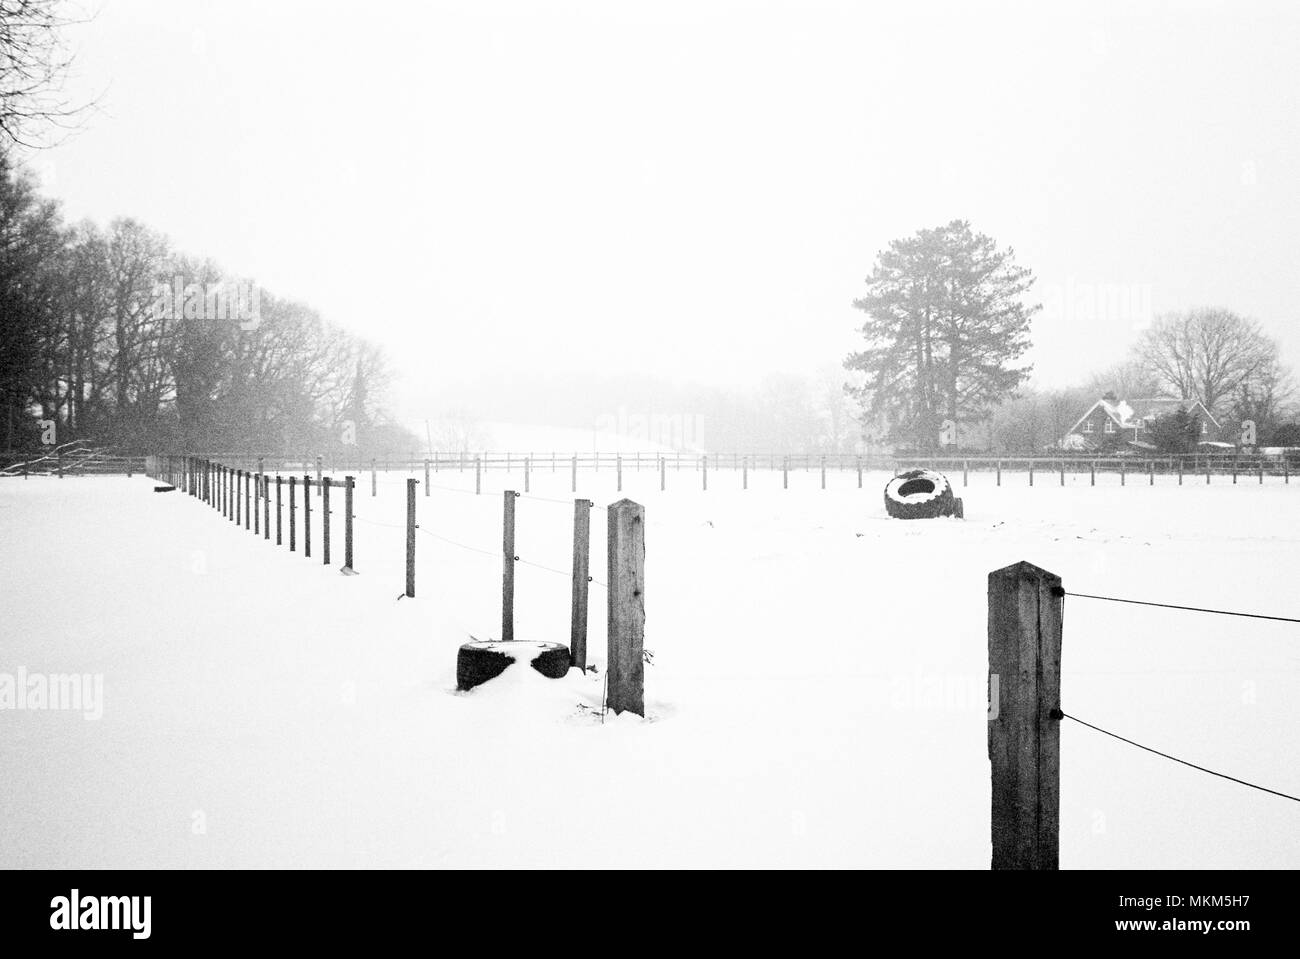 Champs couverts de neige, Medstead, Hampshire, Angleterre, Royaume-Uni. Banque D'Images